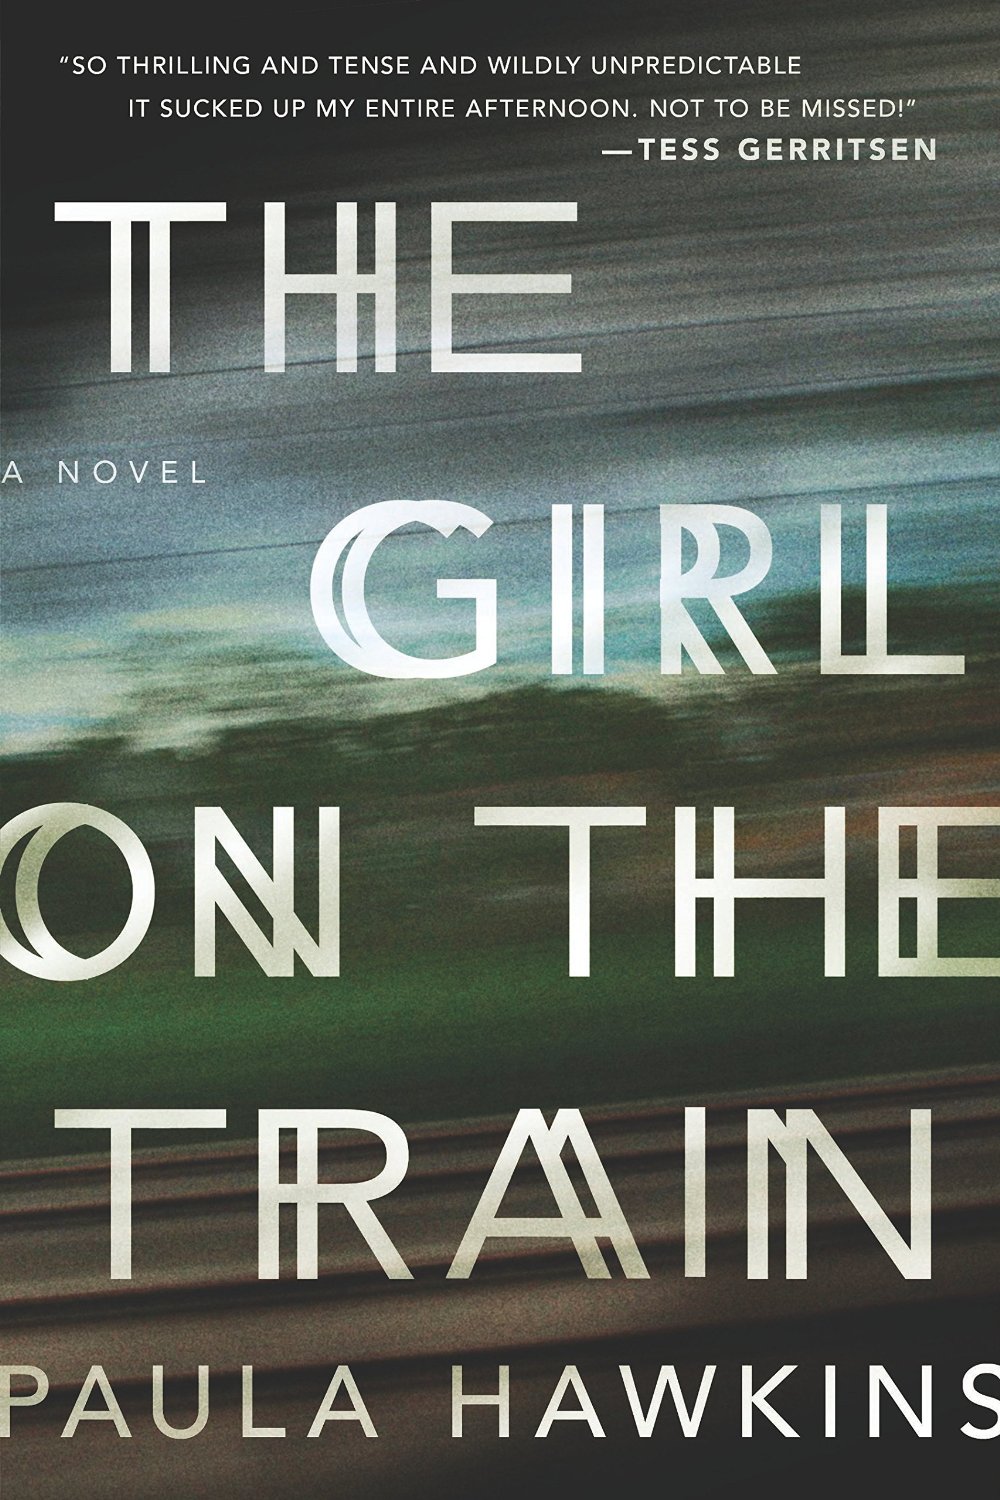 Riverhead Books/Penguin (The Girl on the Train by Paula Hawkins)